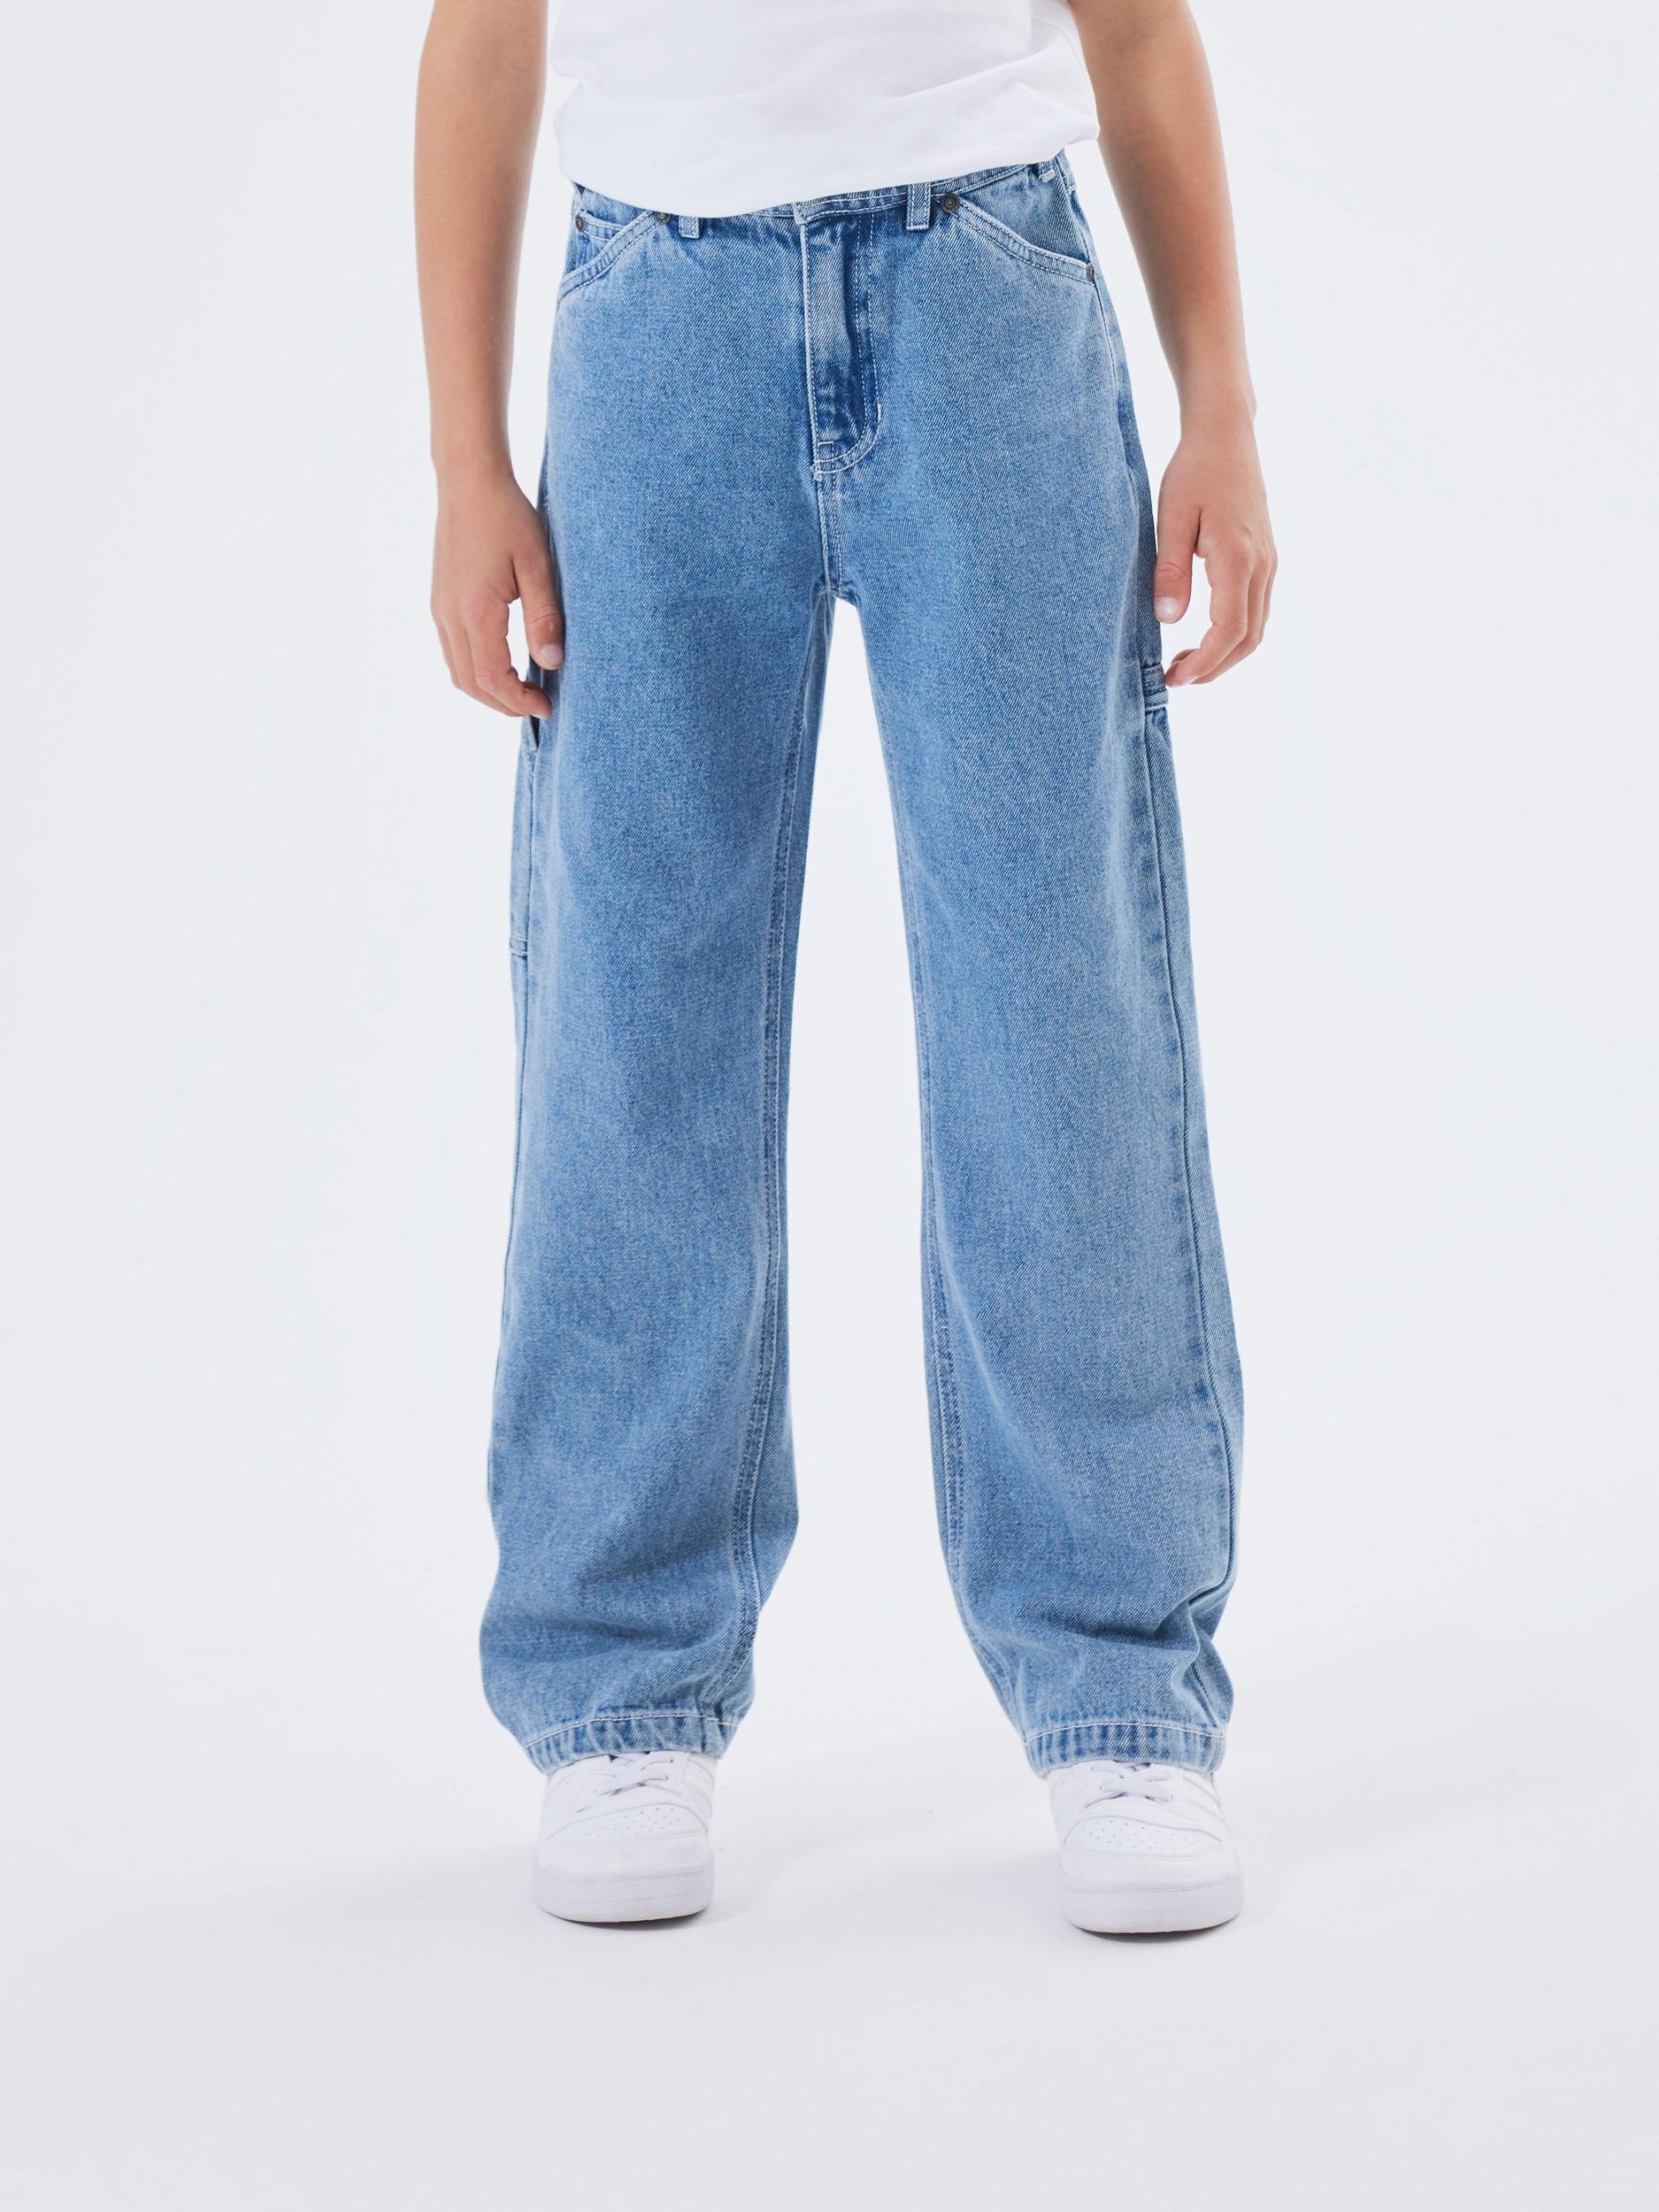 »NKMRYAN 5-Pocket-Jeans 4525-IM bei STRAIGHT NOOS« It JEANS Name online L